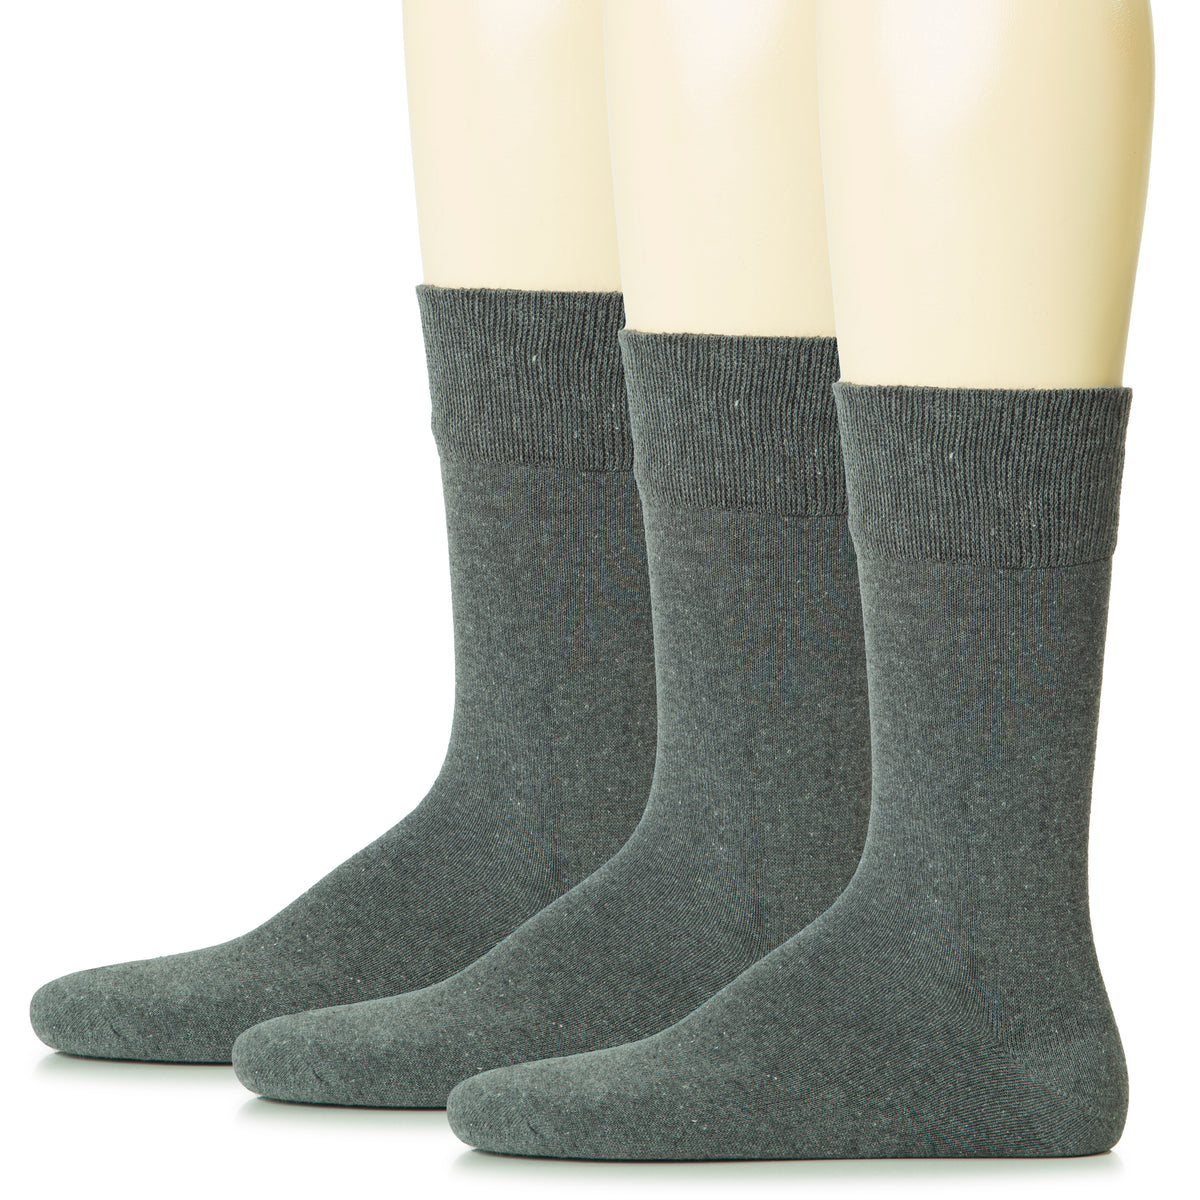 Hugh Ugoli Men Cotton Dress Socks XL / L / M / S Sizes, 3 Pairs | Shoe Size: 8-10 | Dark Gray